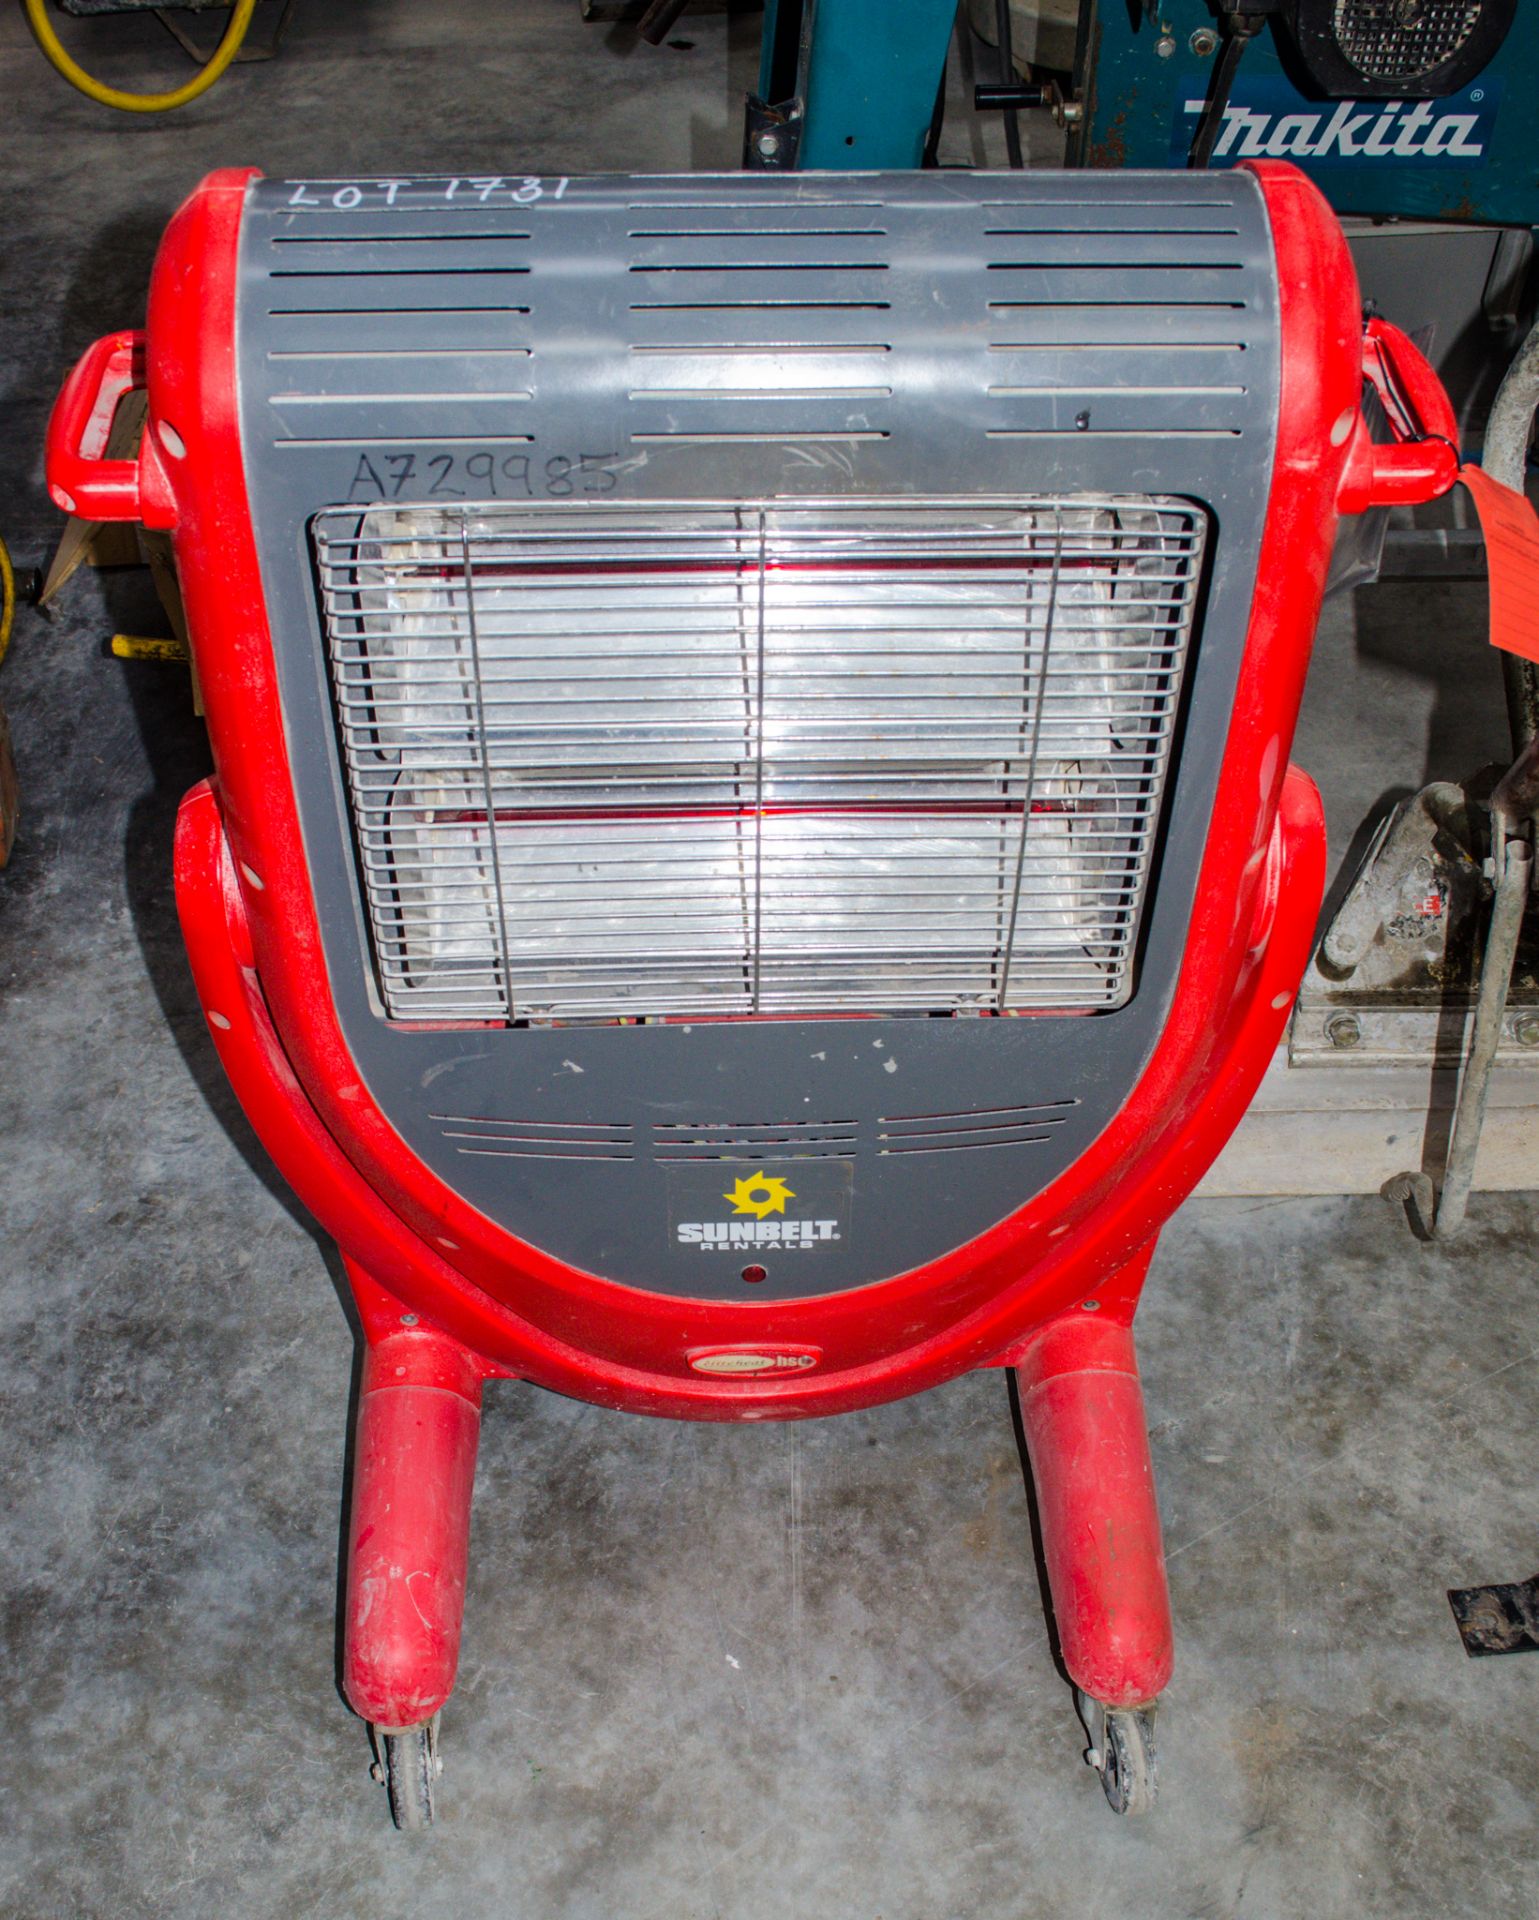 Elite Heat 110v infra red heater A729985